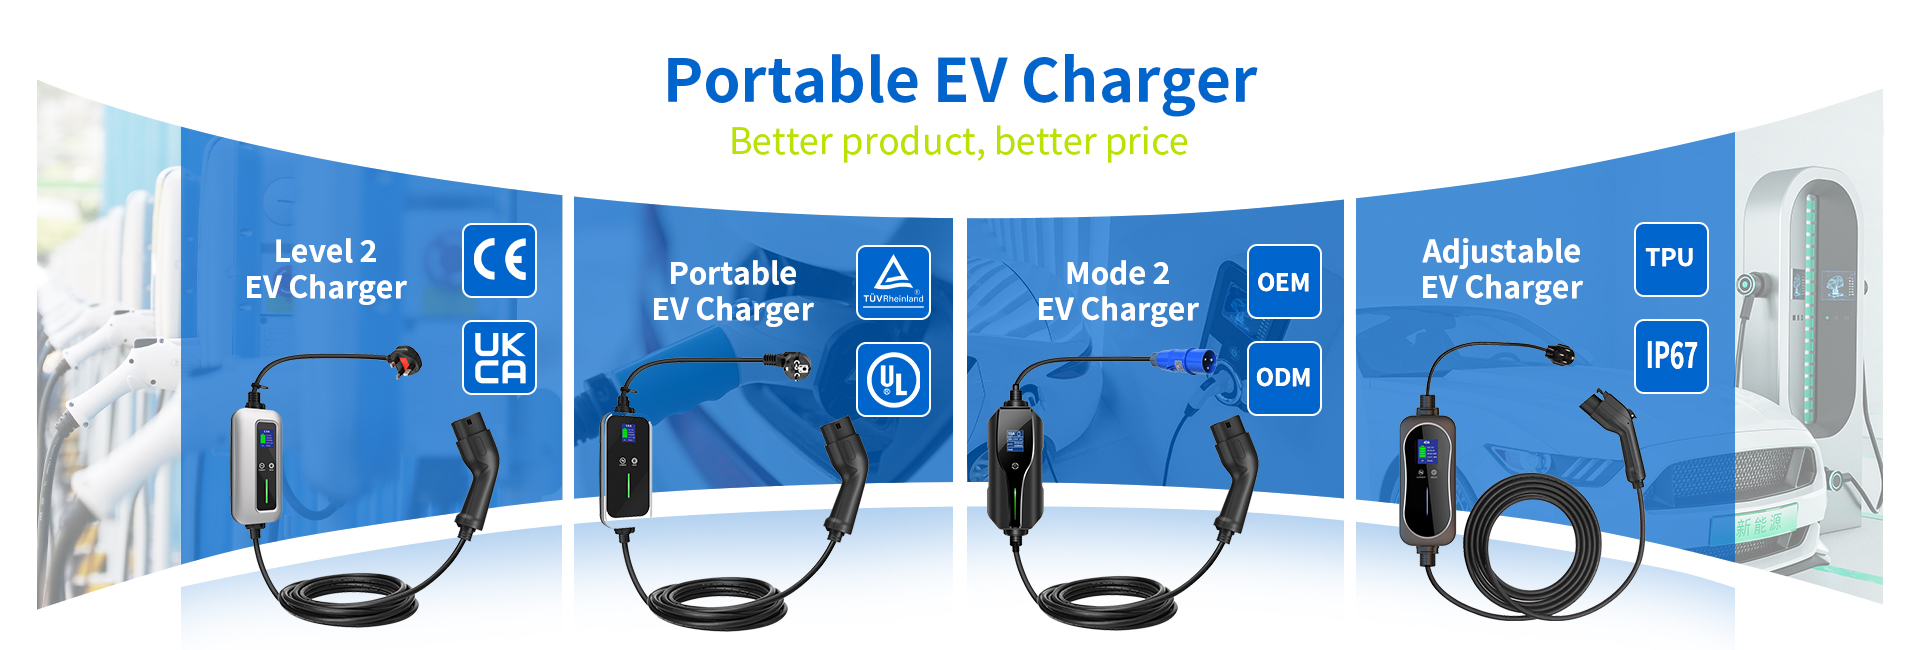 Portable EV Charger